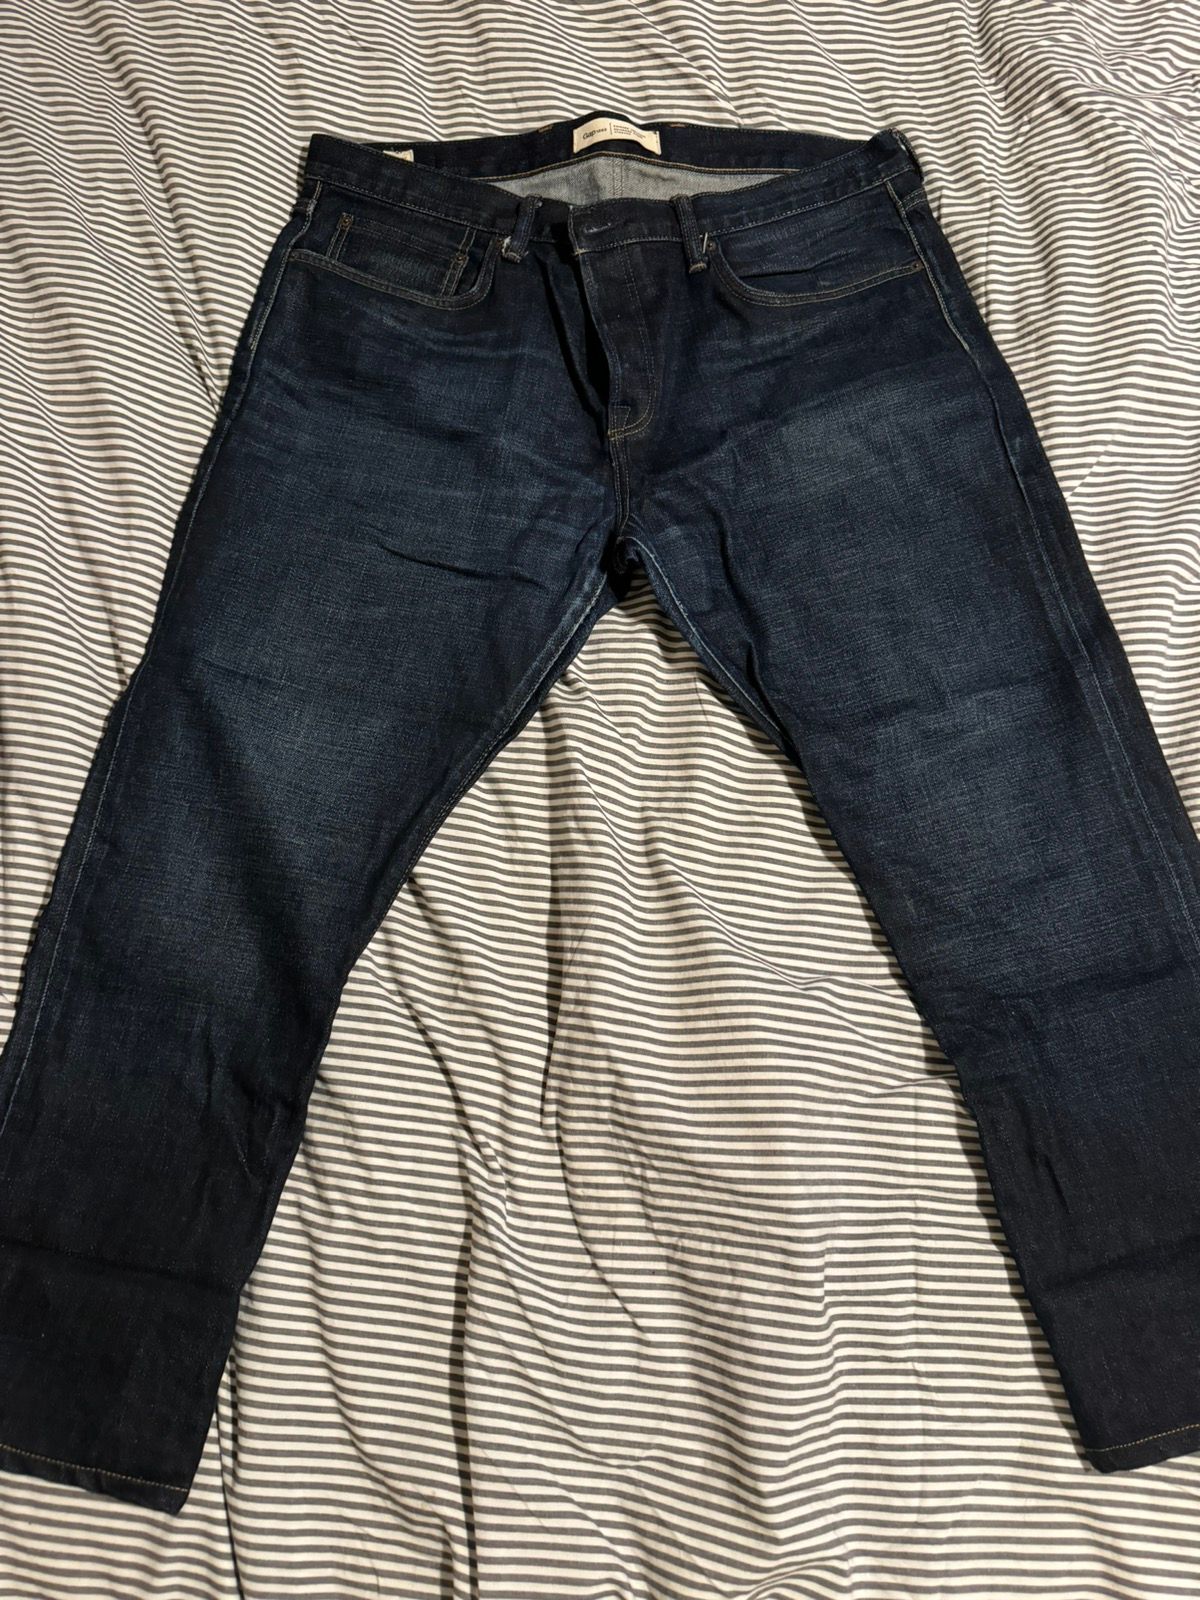 Gap Vintage Gap Selvedge Denim Jeans 38x30 38 Size US 38 / EU 54 - 1 Preview